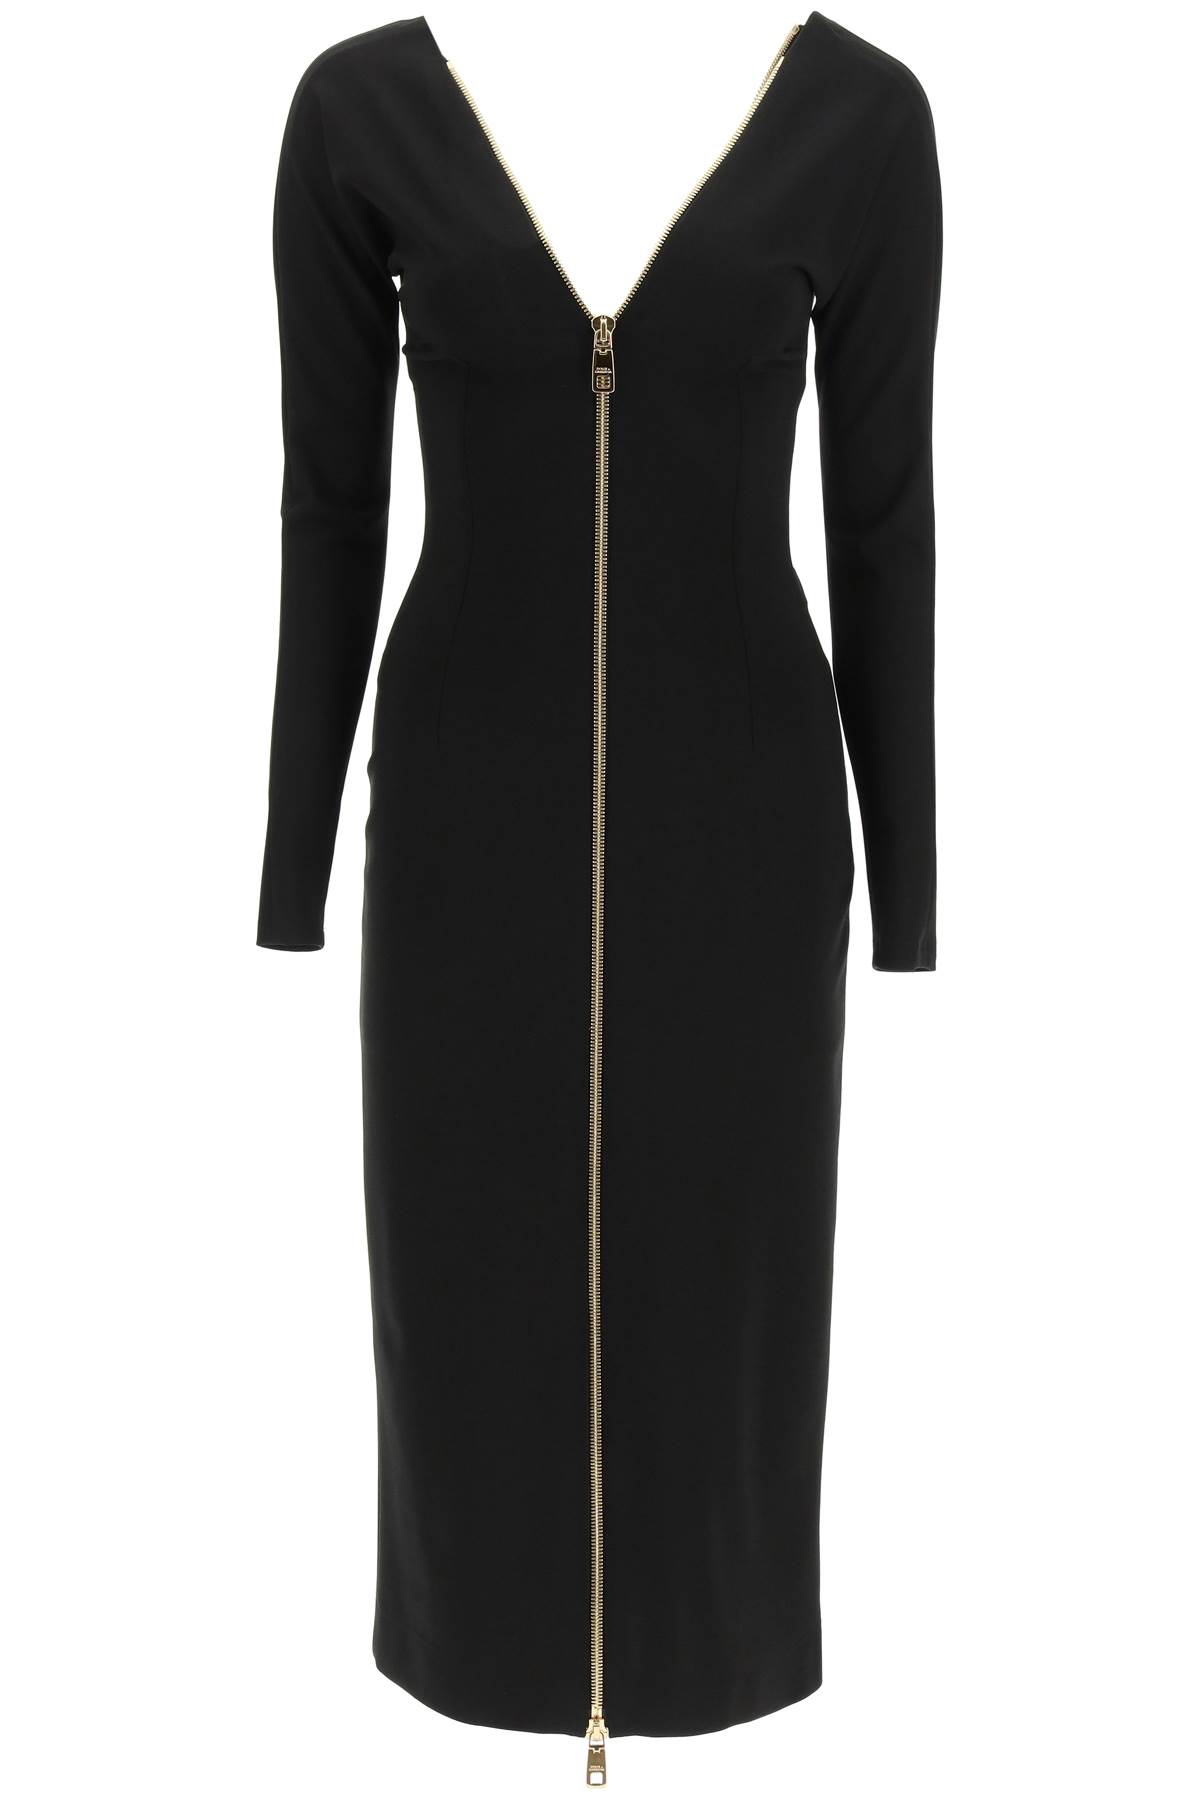 Dolce & Gabbana Longuette Jersey Dress With Zip